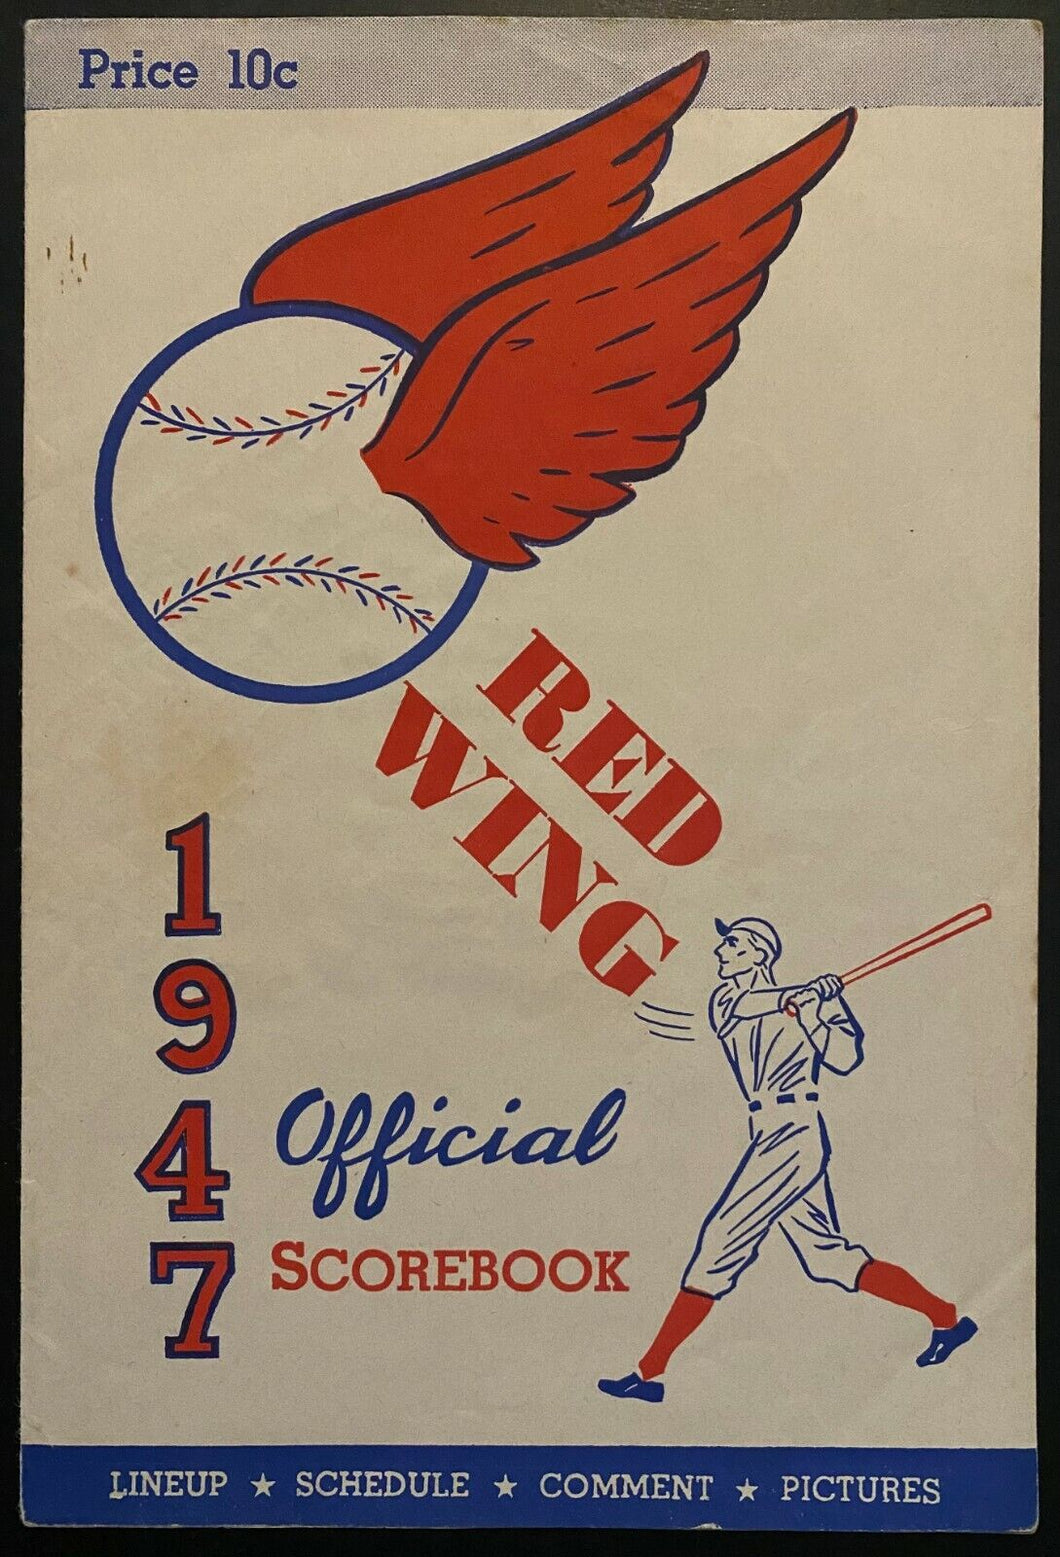 1947 MiLB AAA Baseball Program Rochester Red Wings Baltimore Orioles Vintage